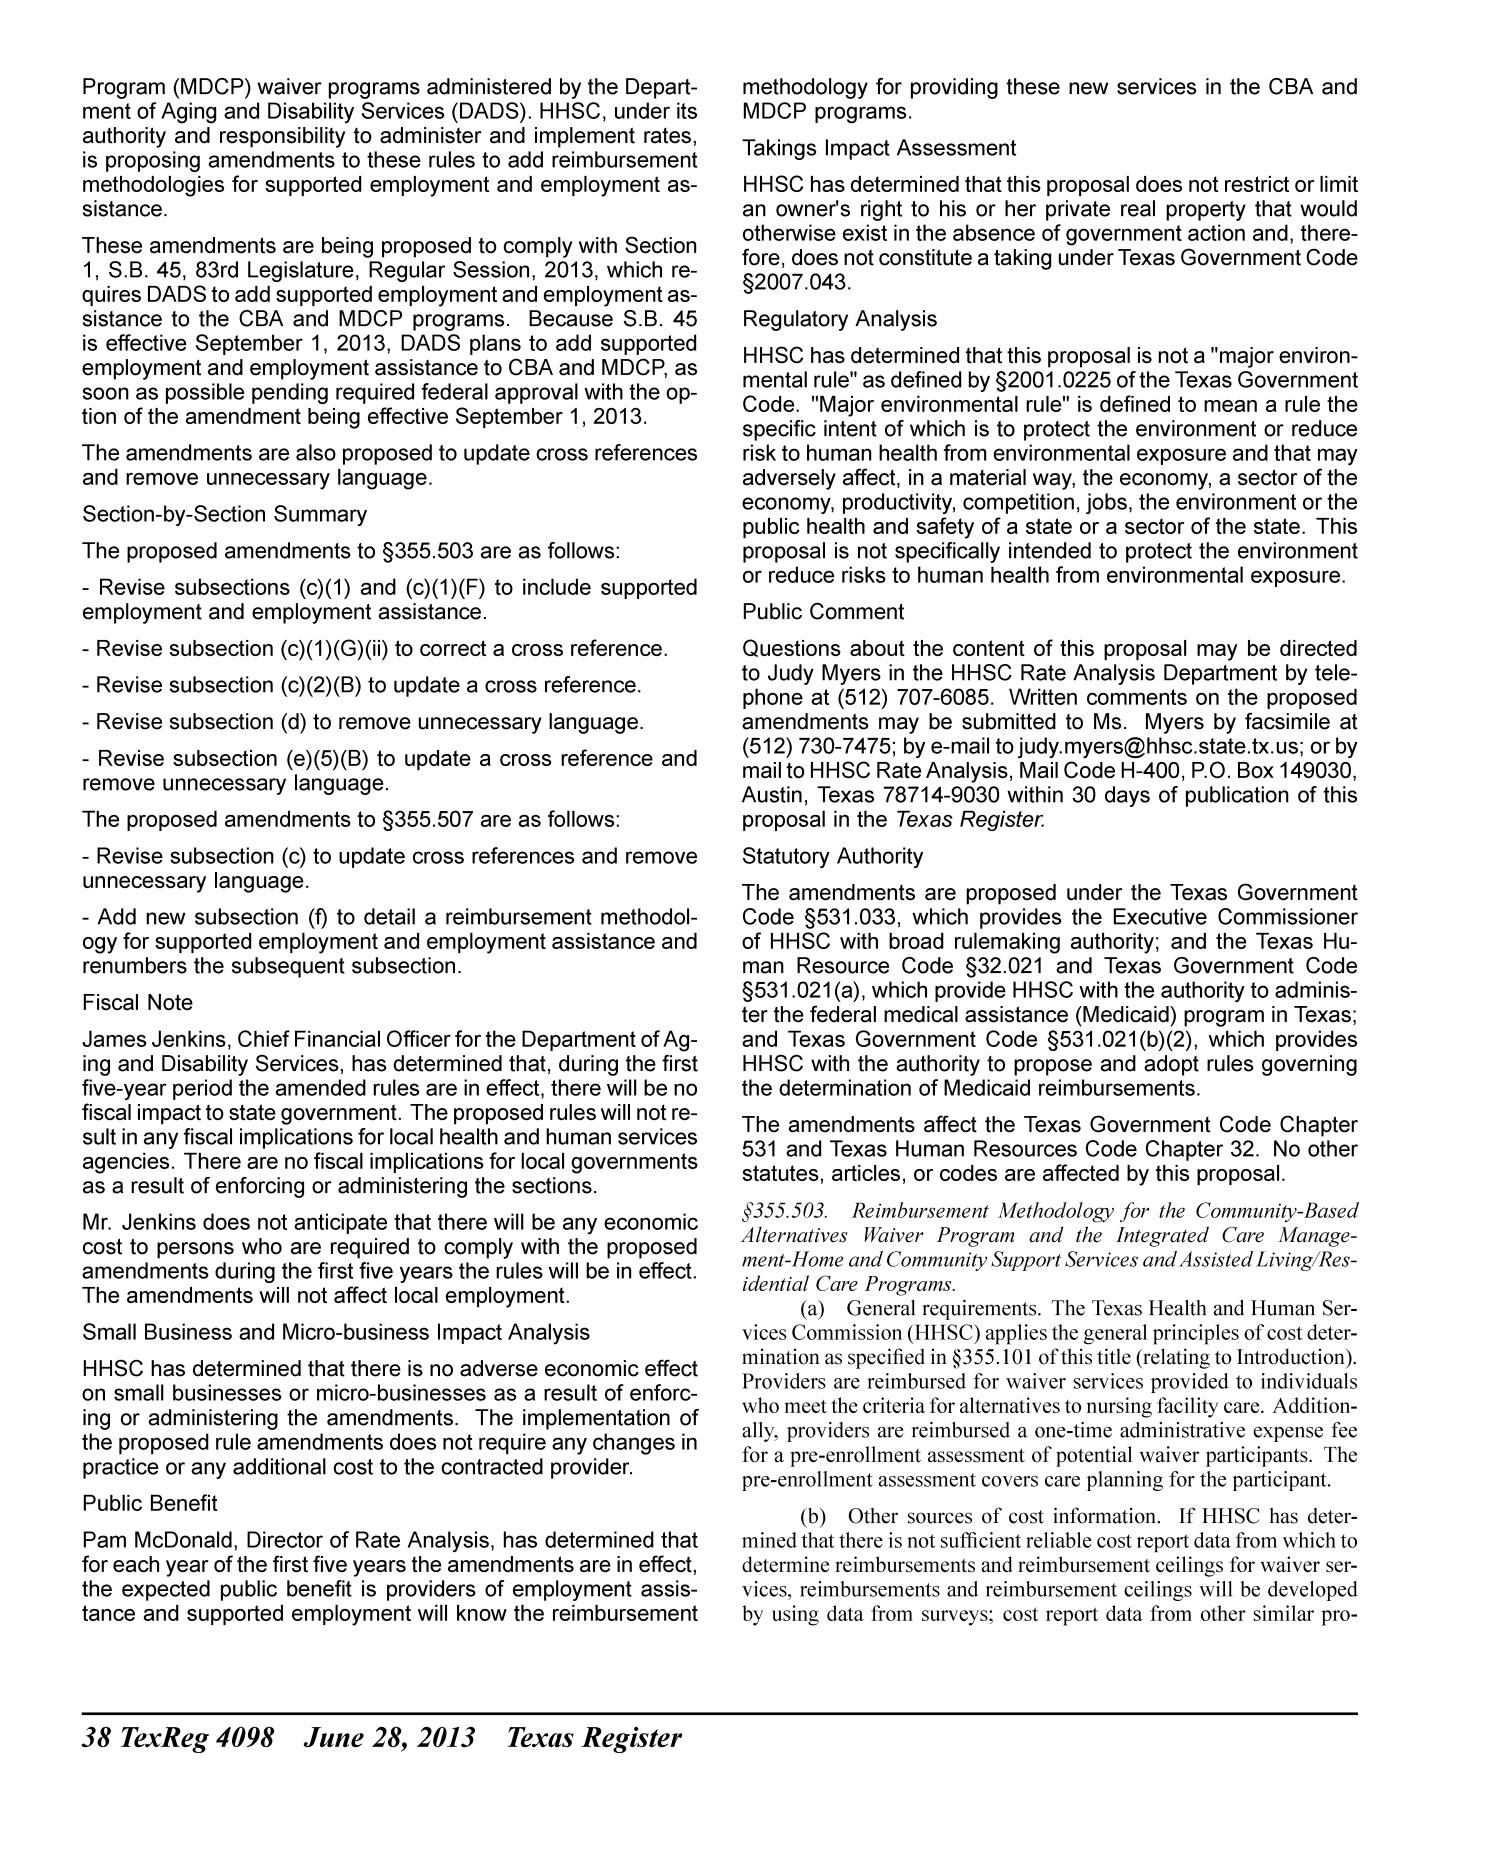 Texas Register, Volume 38, Number 26, Pages 4053-4242, June 28, 2013
                                                
                                                    4098
                                                